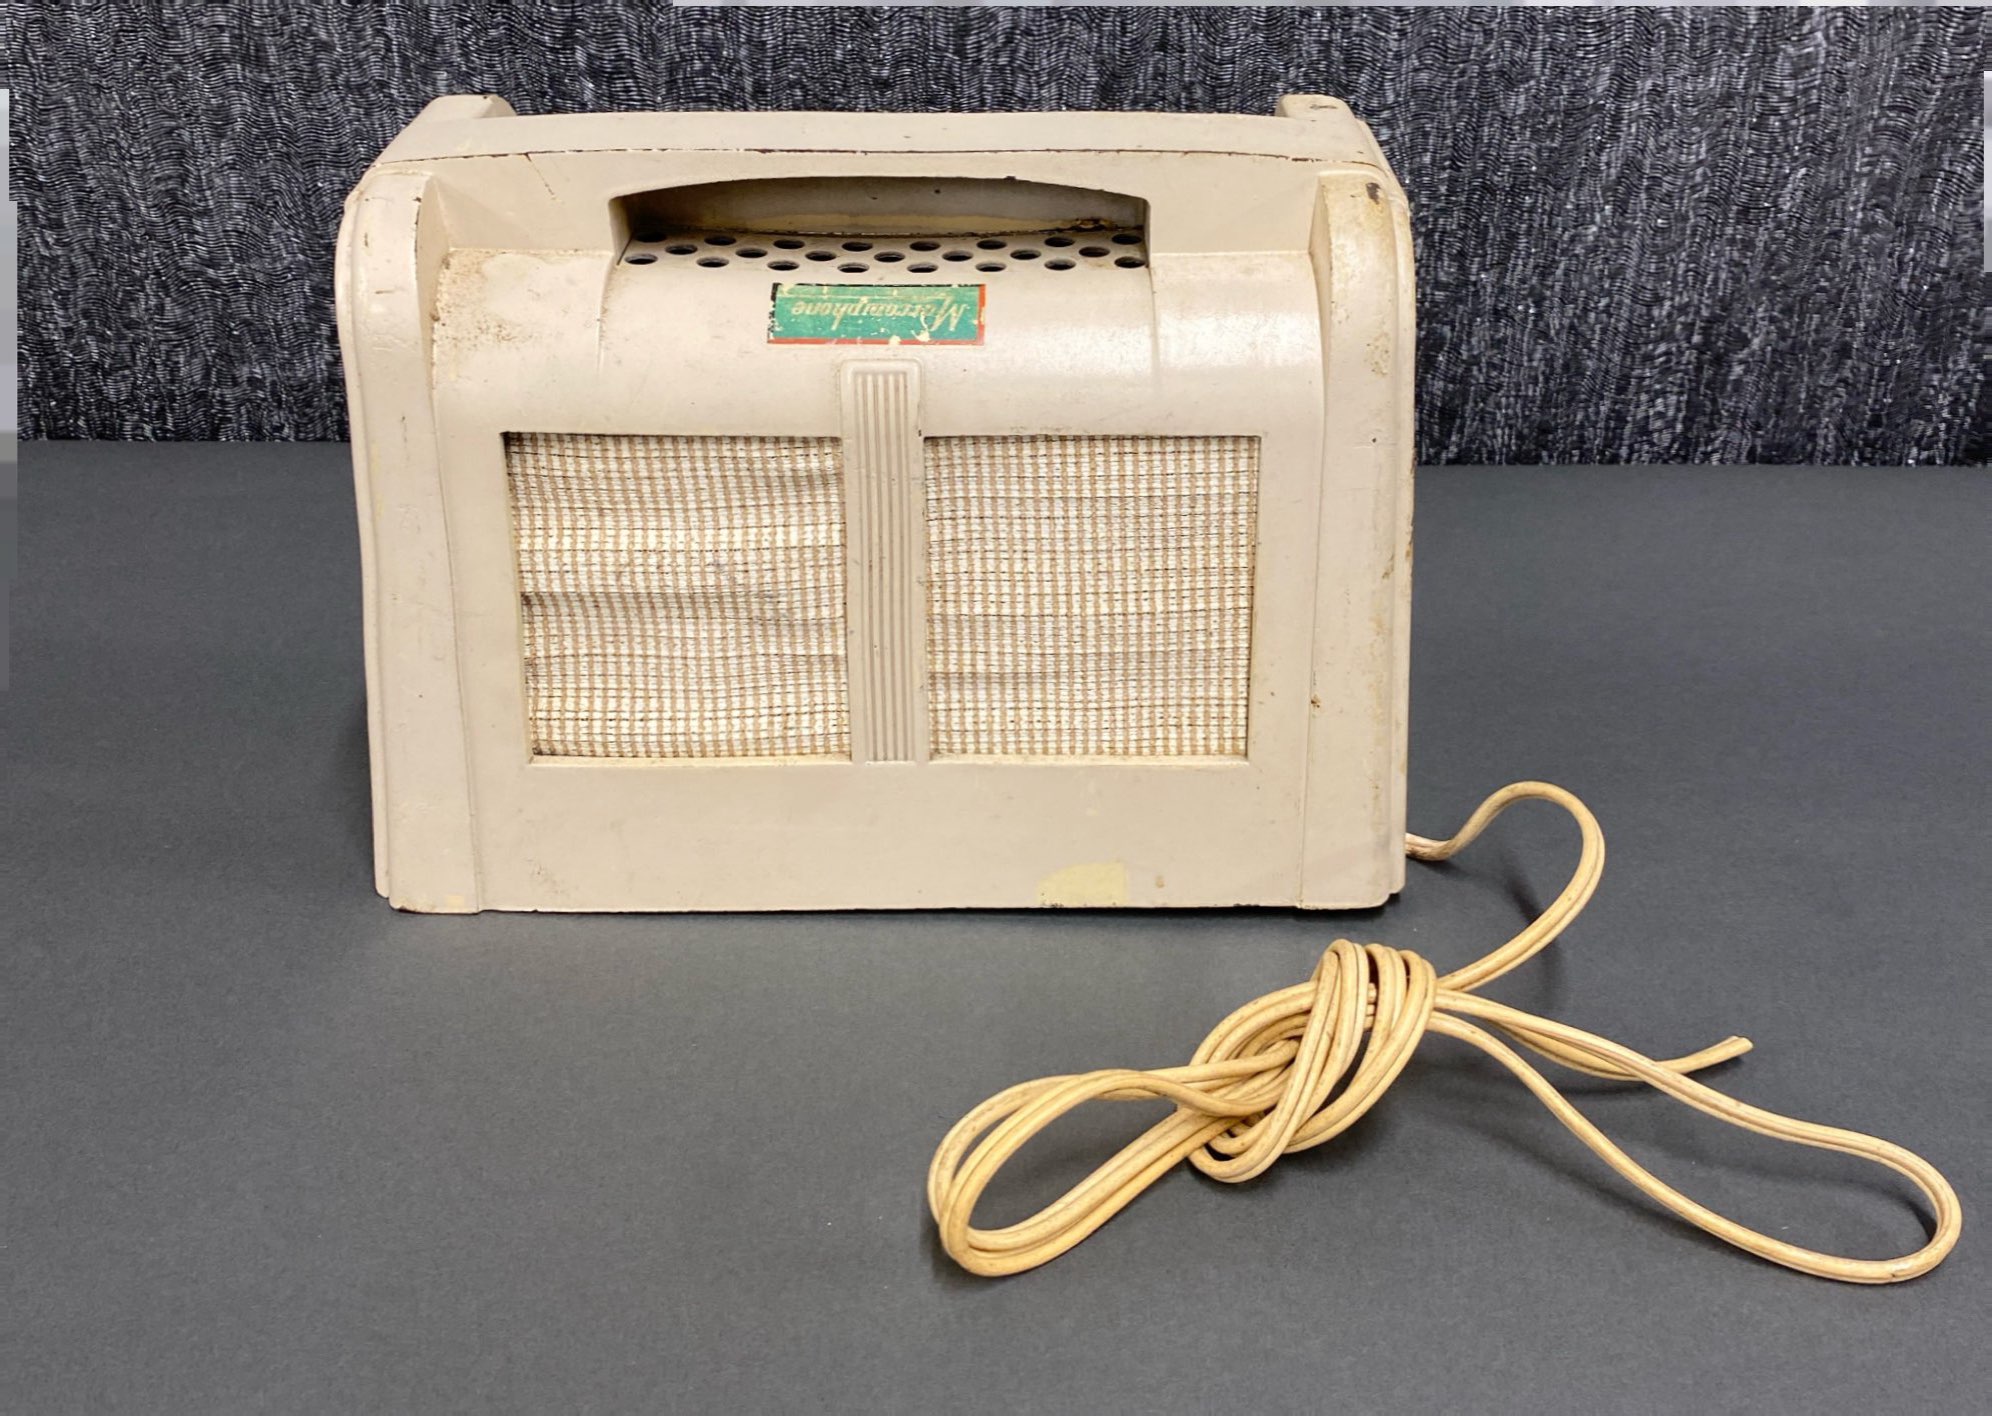 A vintage Marconi T25 radio. - Image 2 of 3